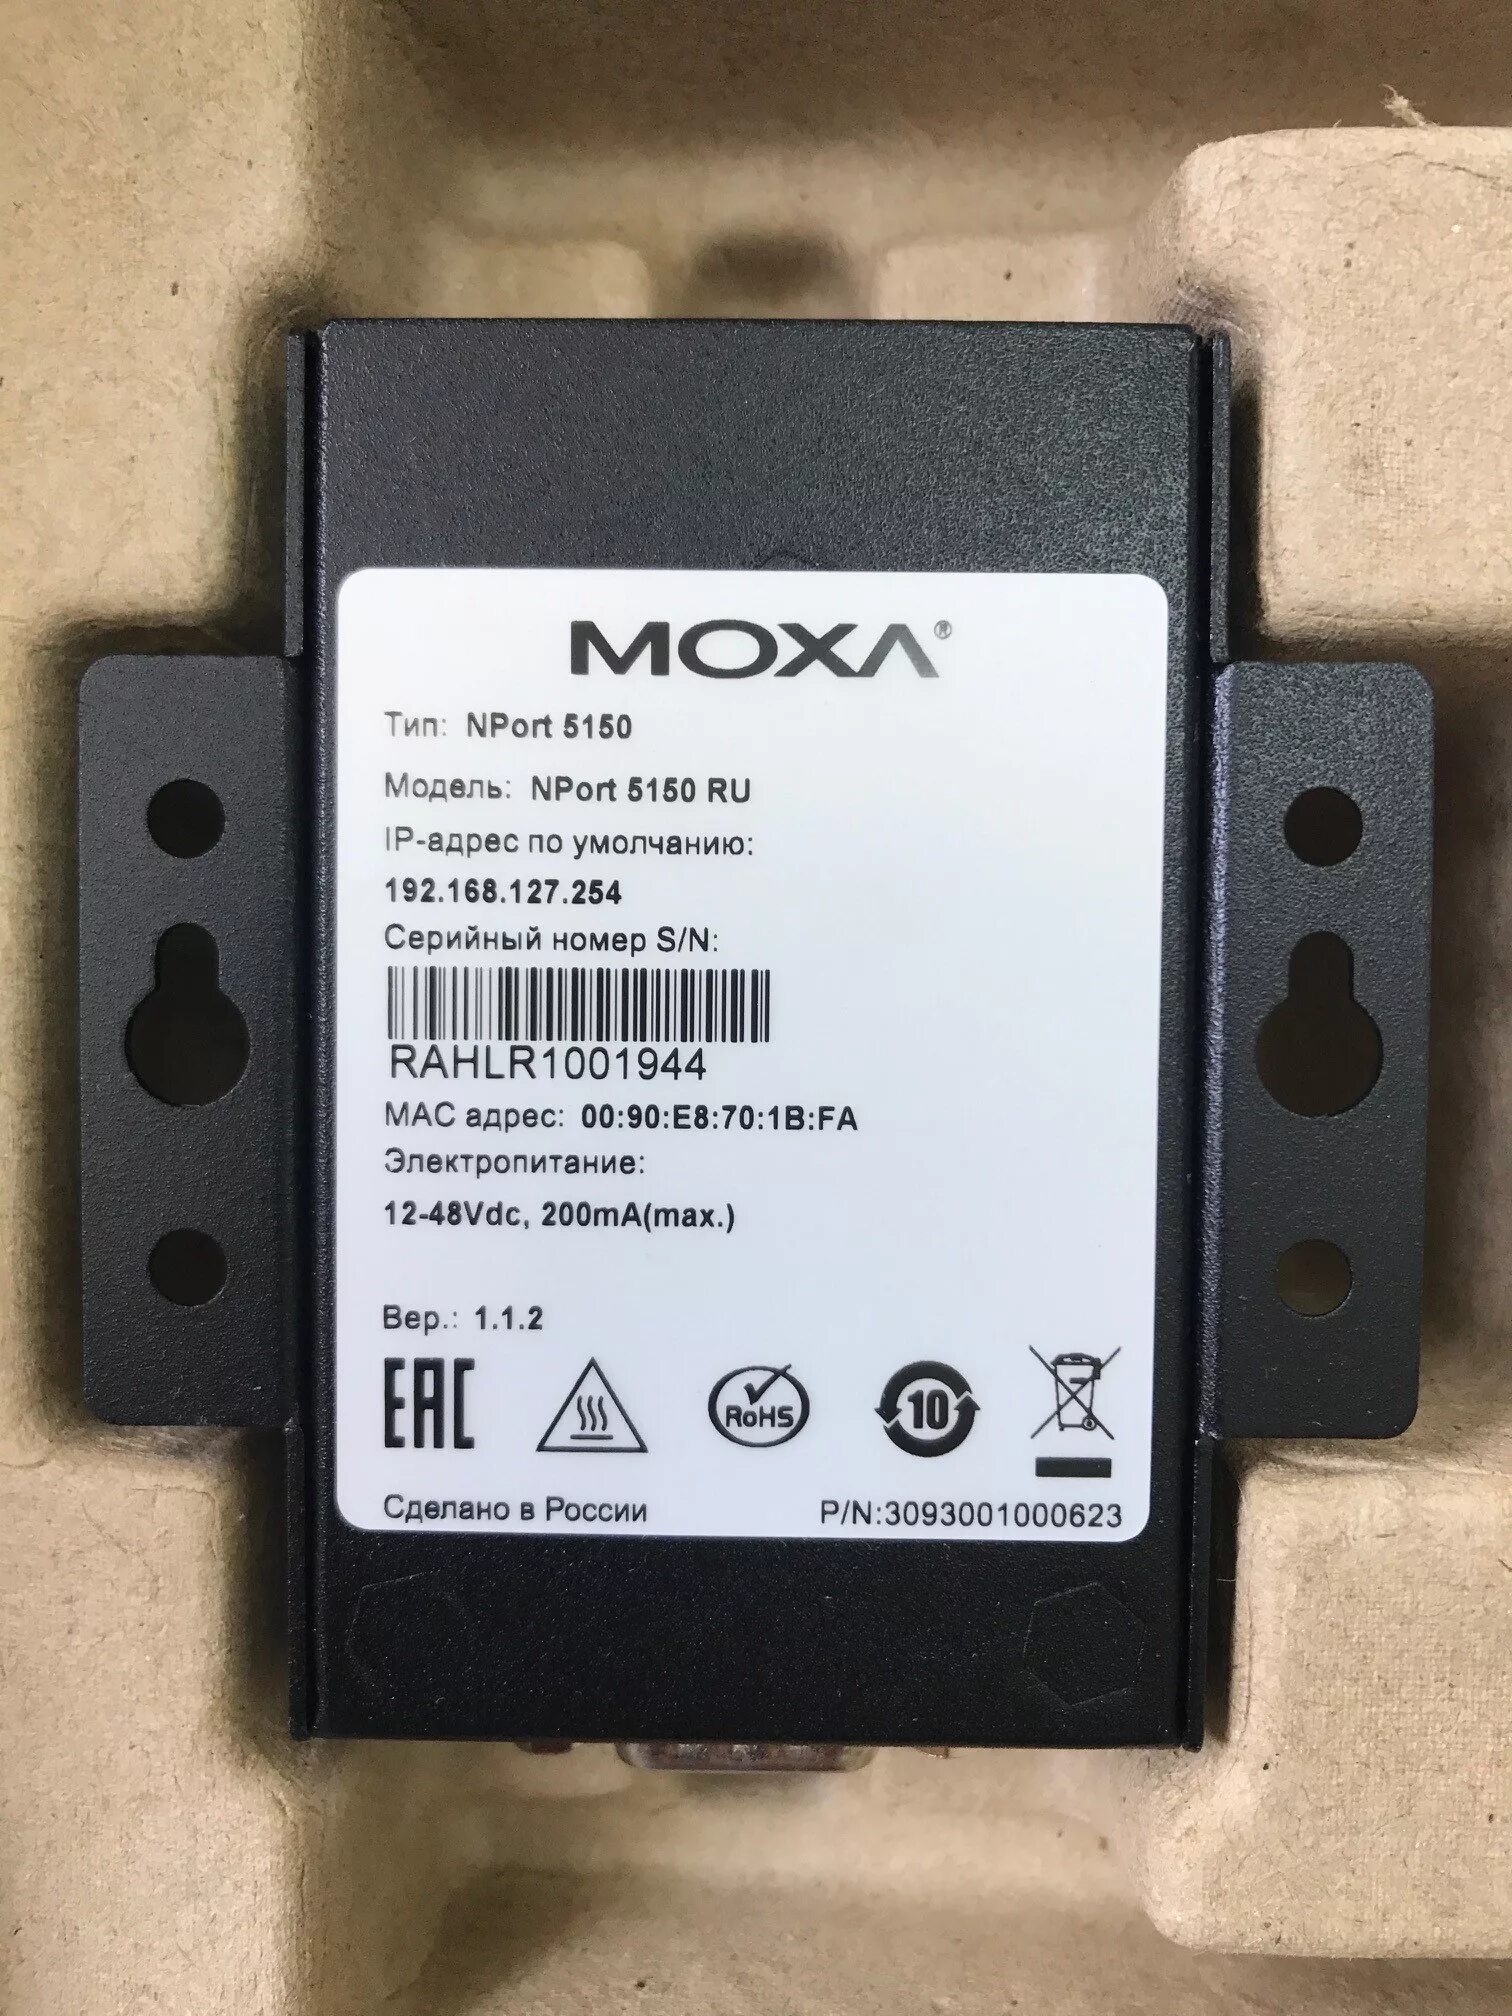 Moxa 5150. Преобразователь NPORT 5150. Преобразователь интерфейсов Moxa 5150. NPORT ia5150-t. Моха NPORT 5150.